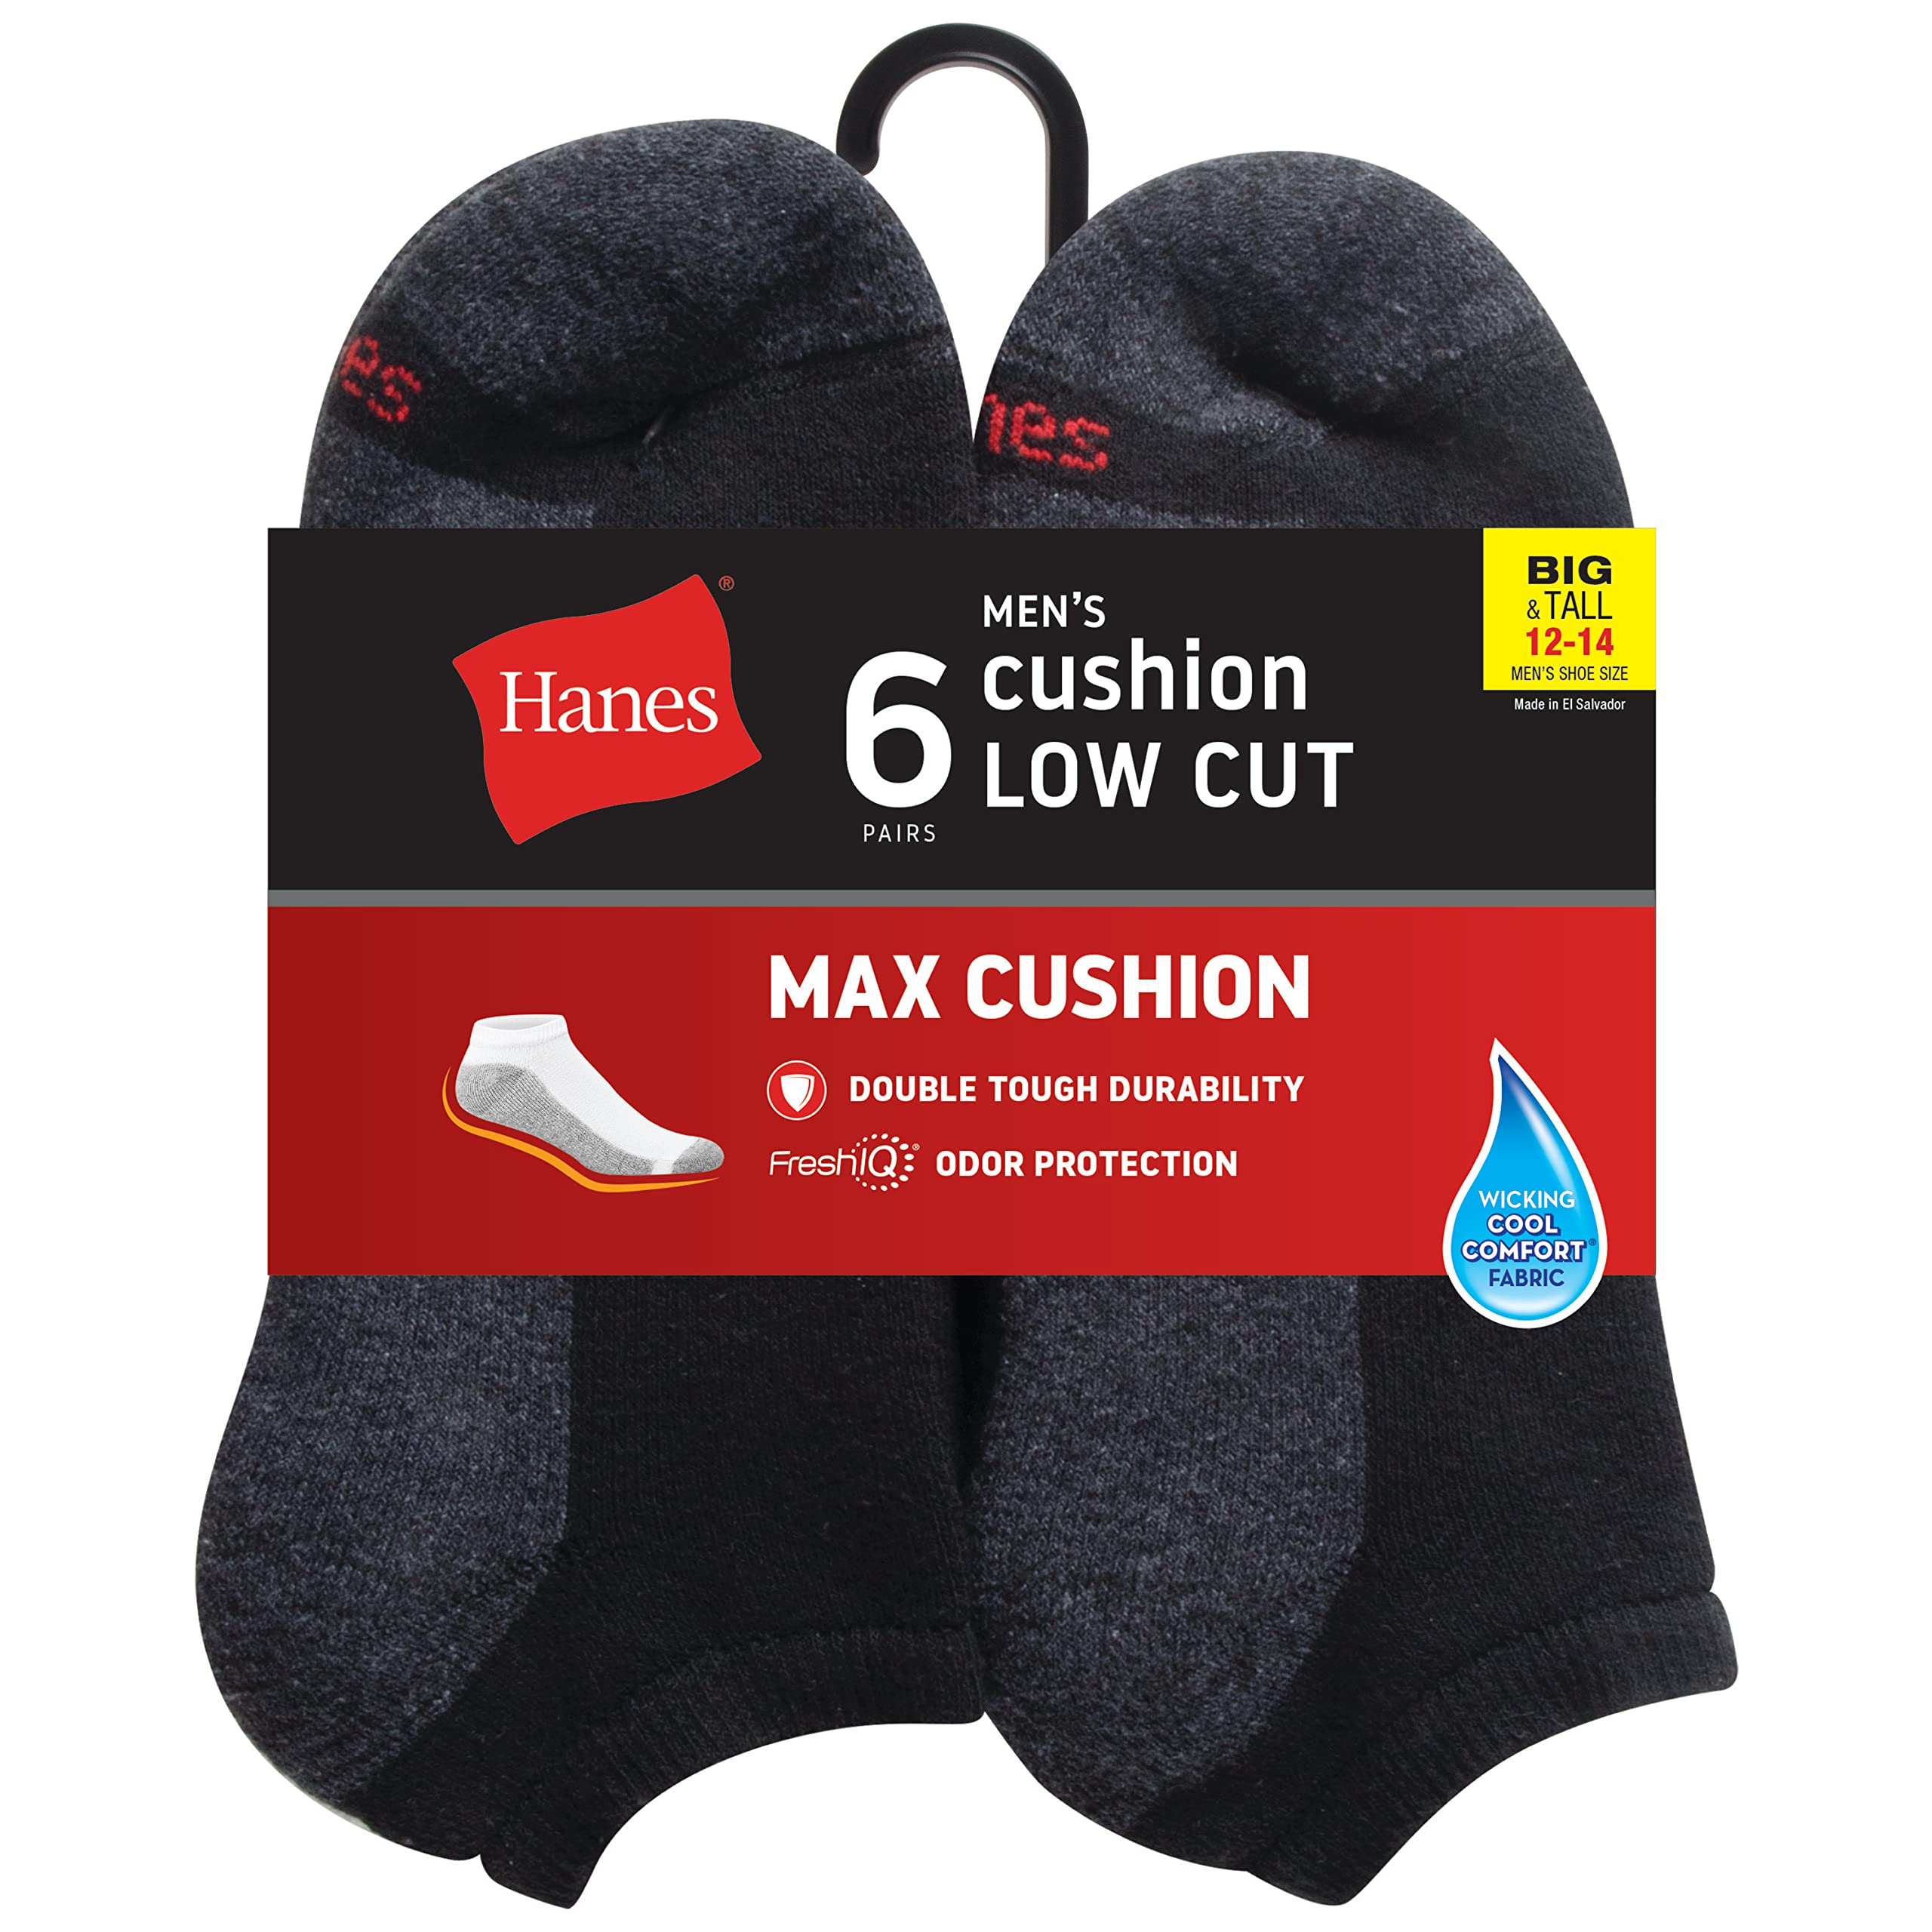 Hanes mens Max Cushion Low Cut Socks, 6-pair Pack